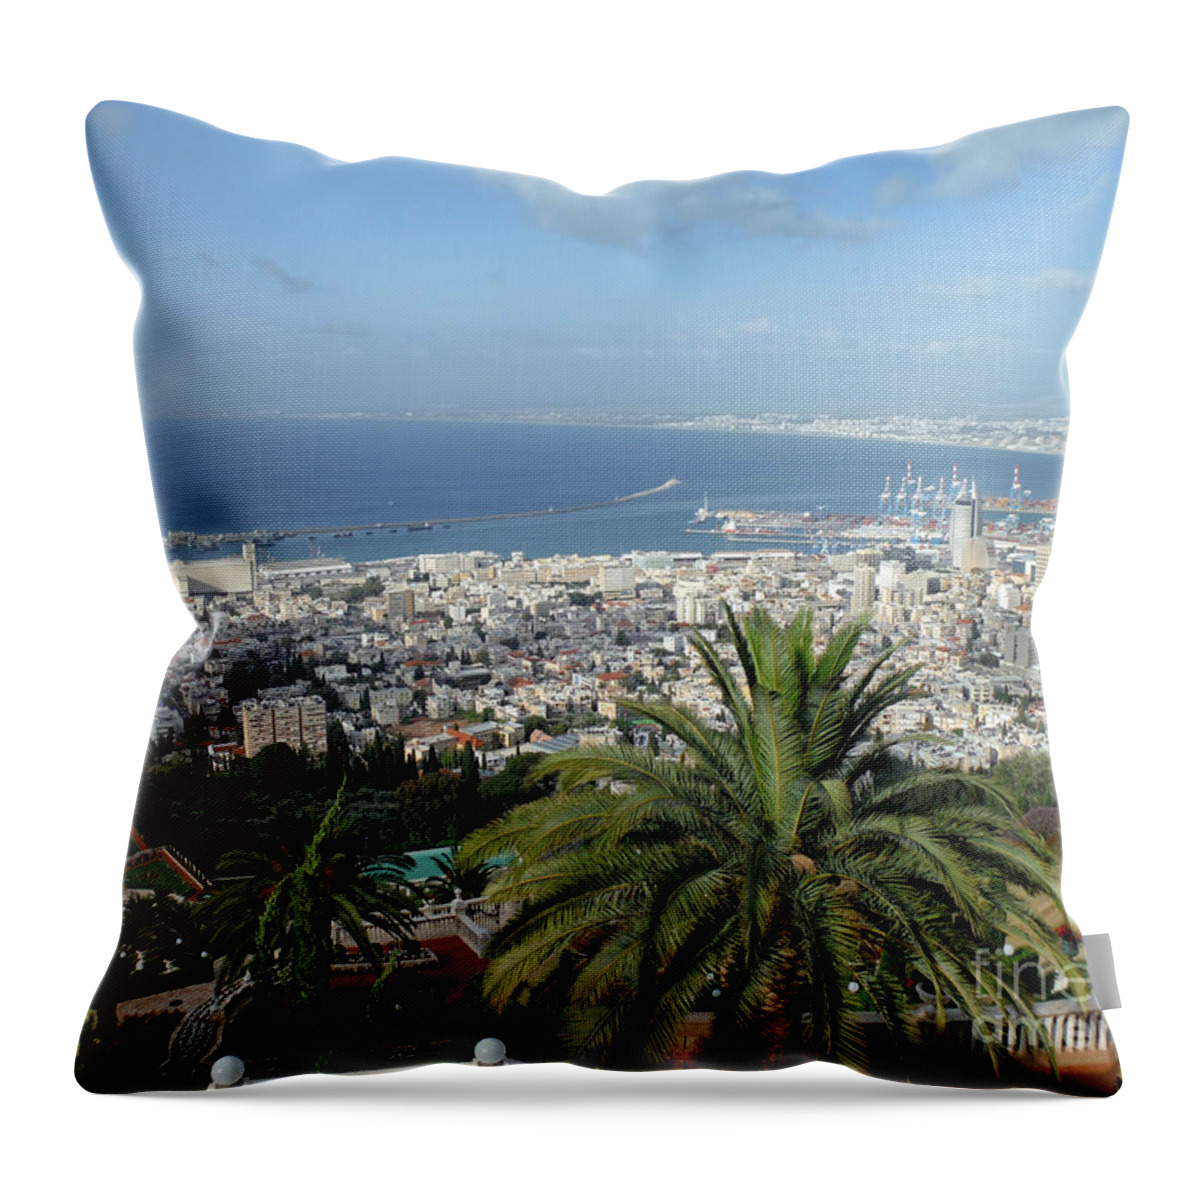 Haifa Throw Pillow featuring the photograph Haifa Israel by Jeremy Berkheimer